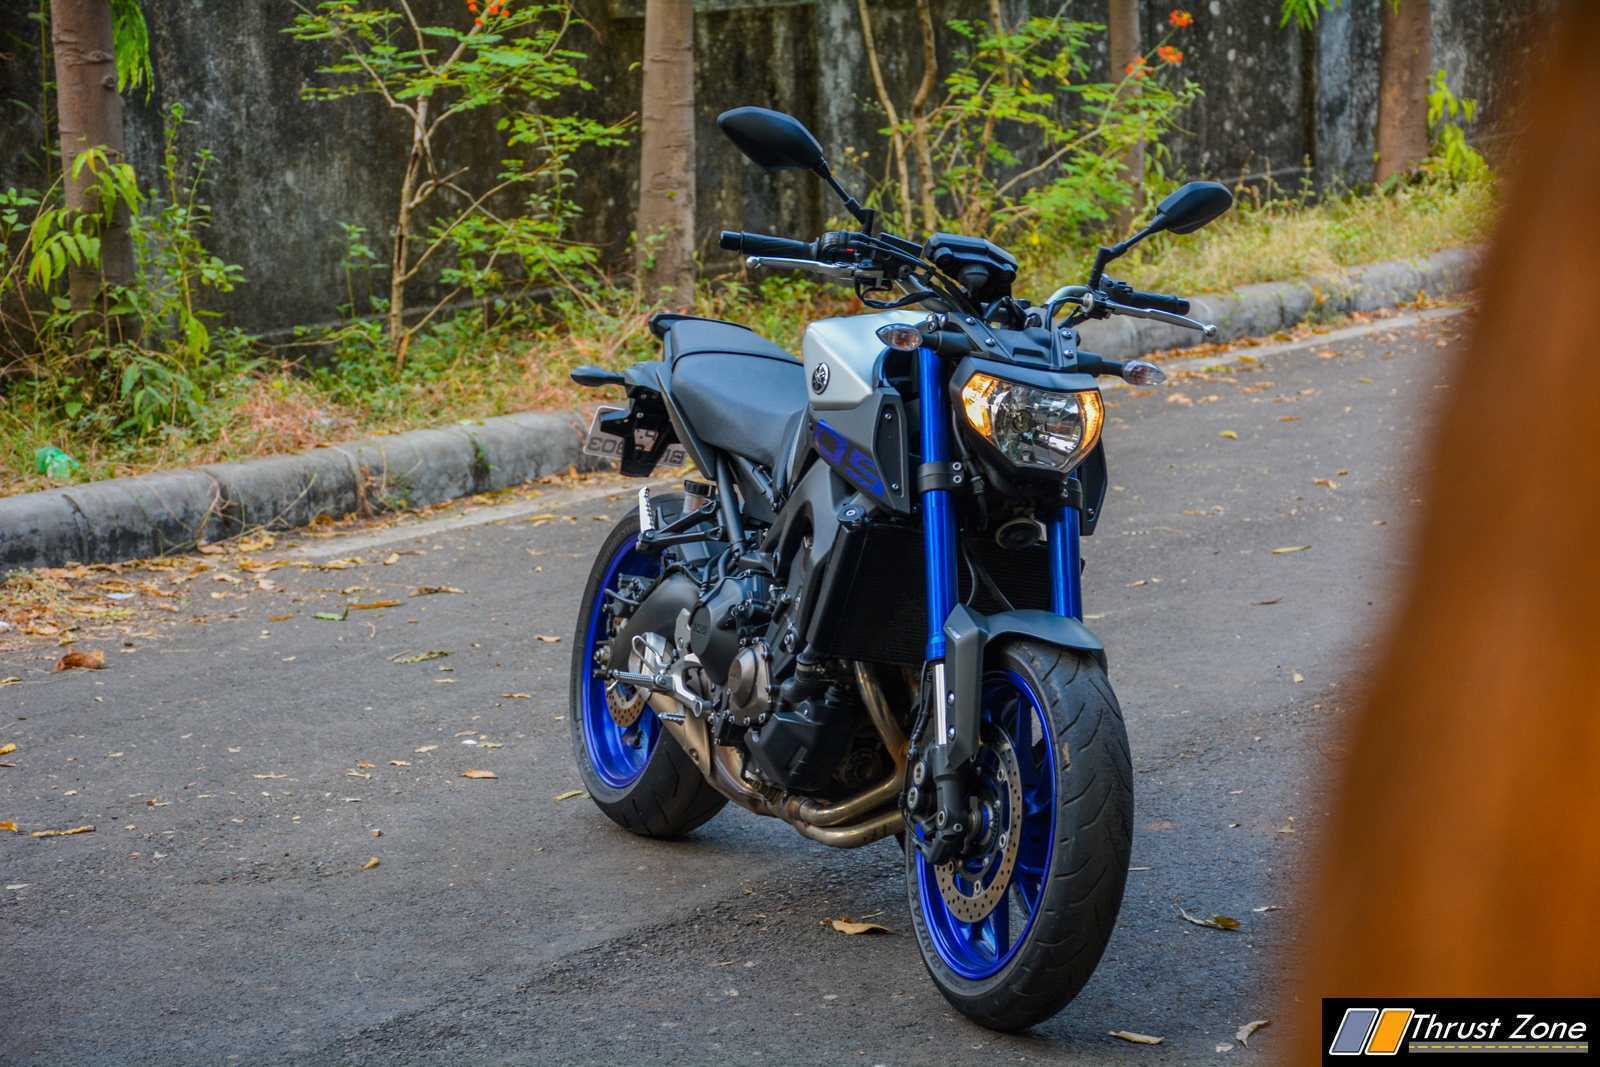 https://www.thrustzone.com/wp-content/uploads/2017/11/Yamaha-MT-09-India-Ride-Review-21.jpg